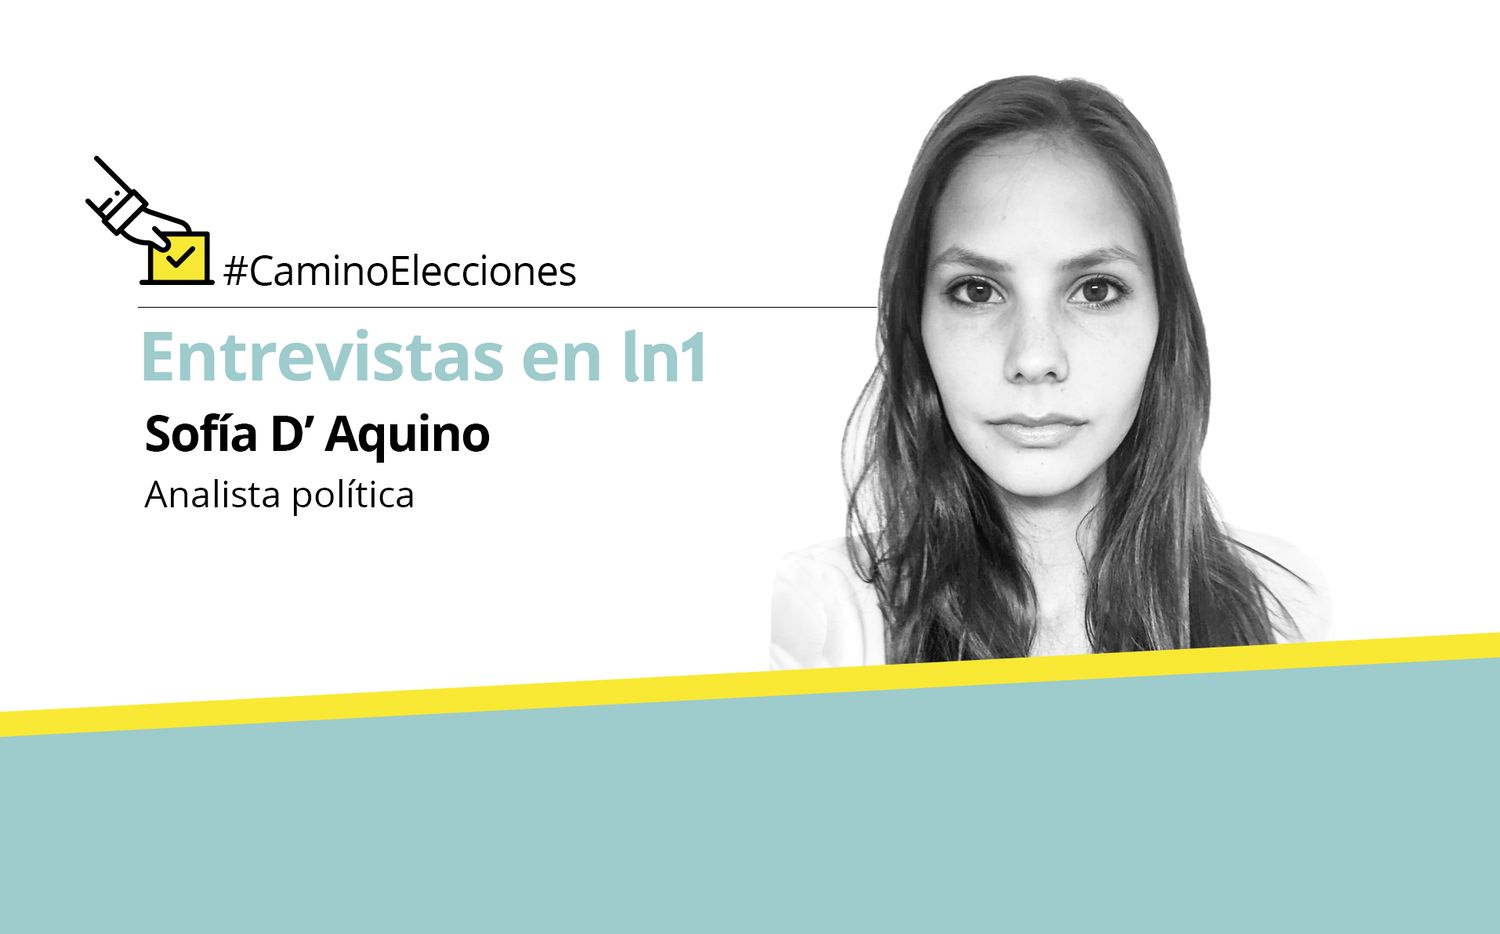 Sofia D’Aquino: “Cambiemos busca instalar a Macri dentro de la imagen positiva de Vidal”